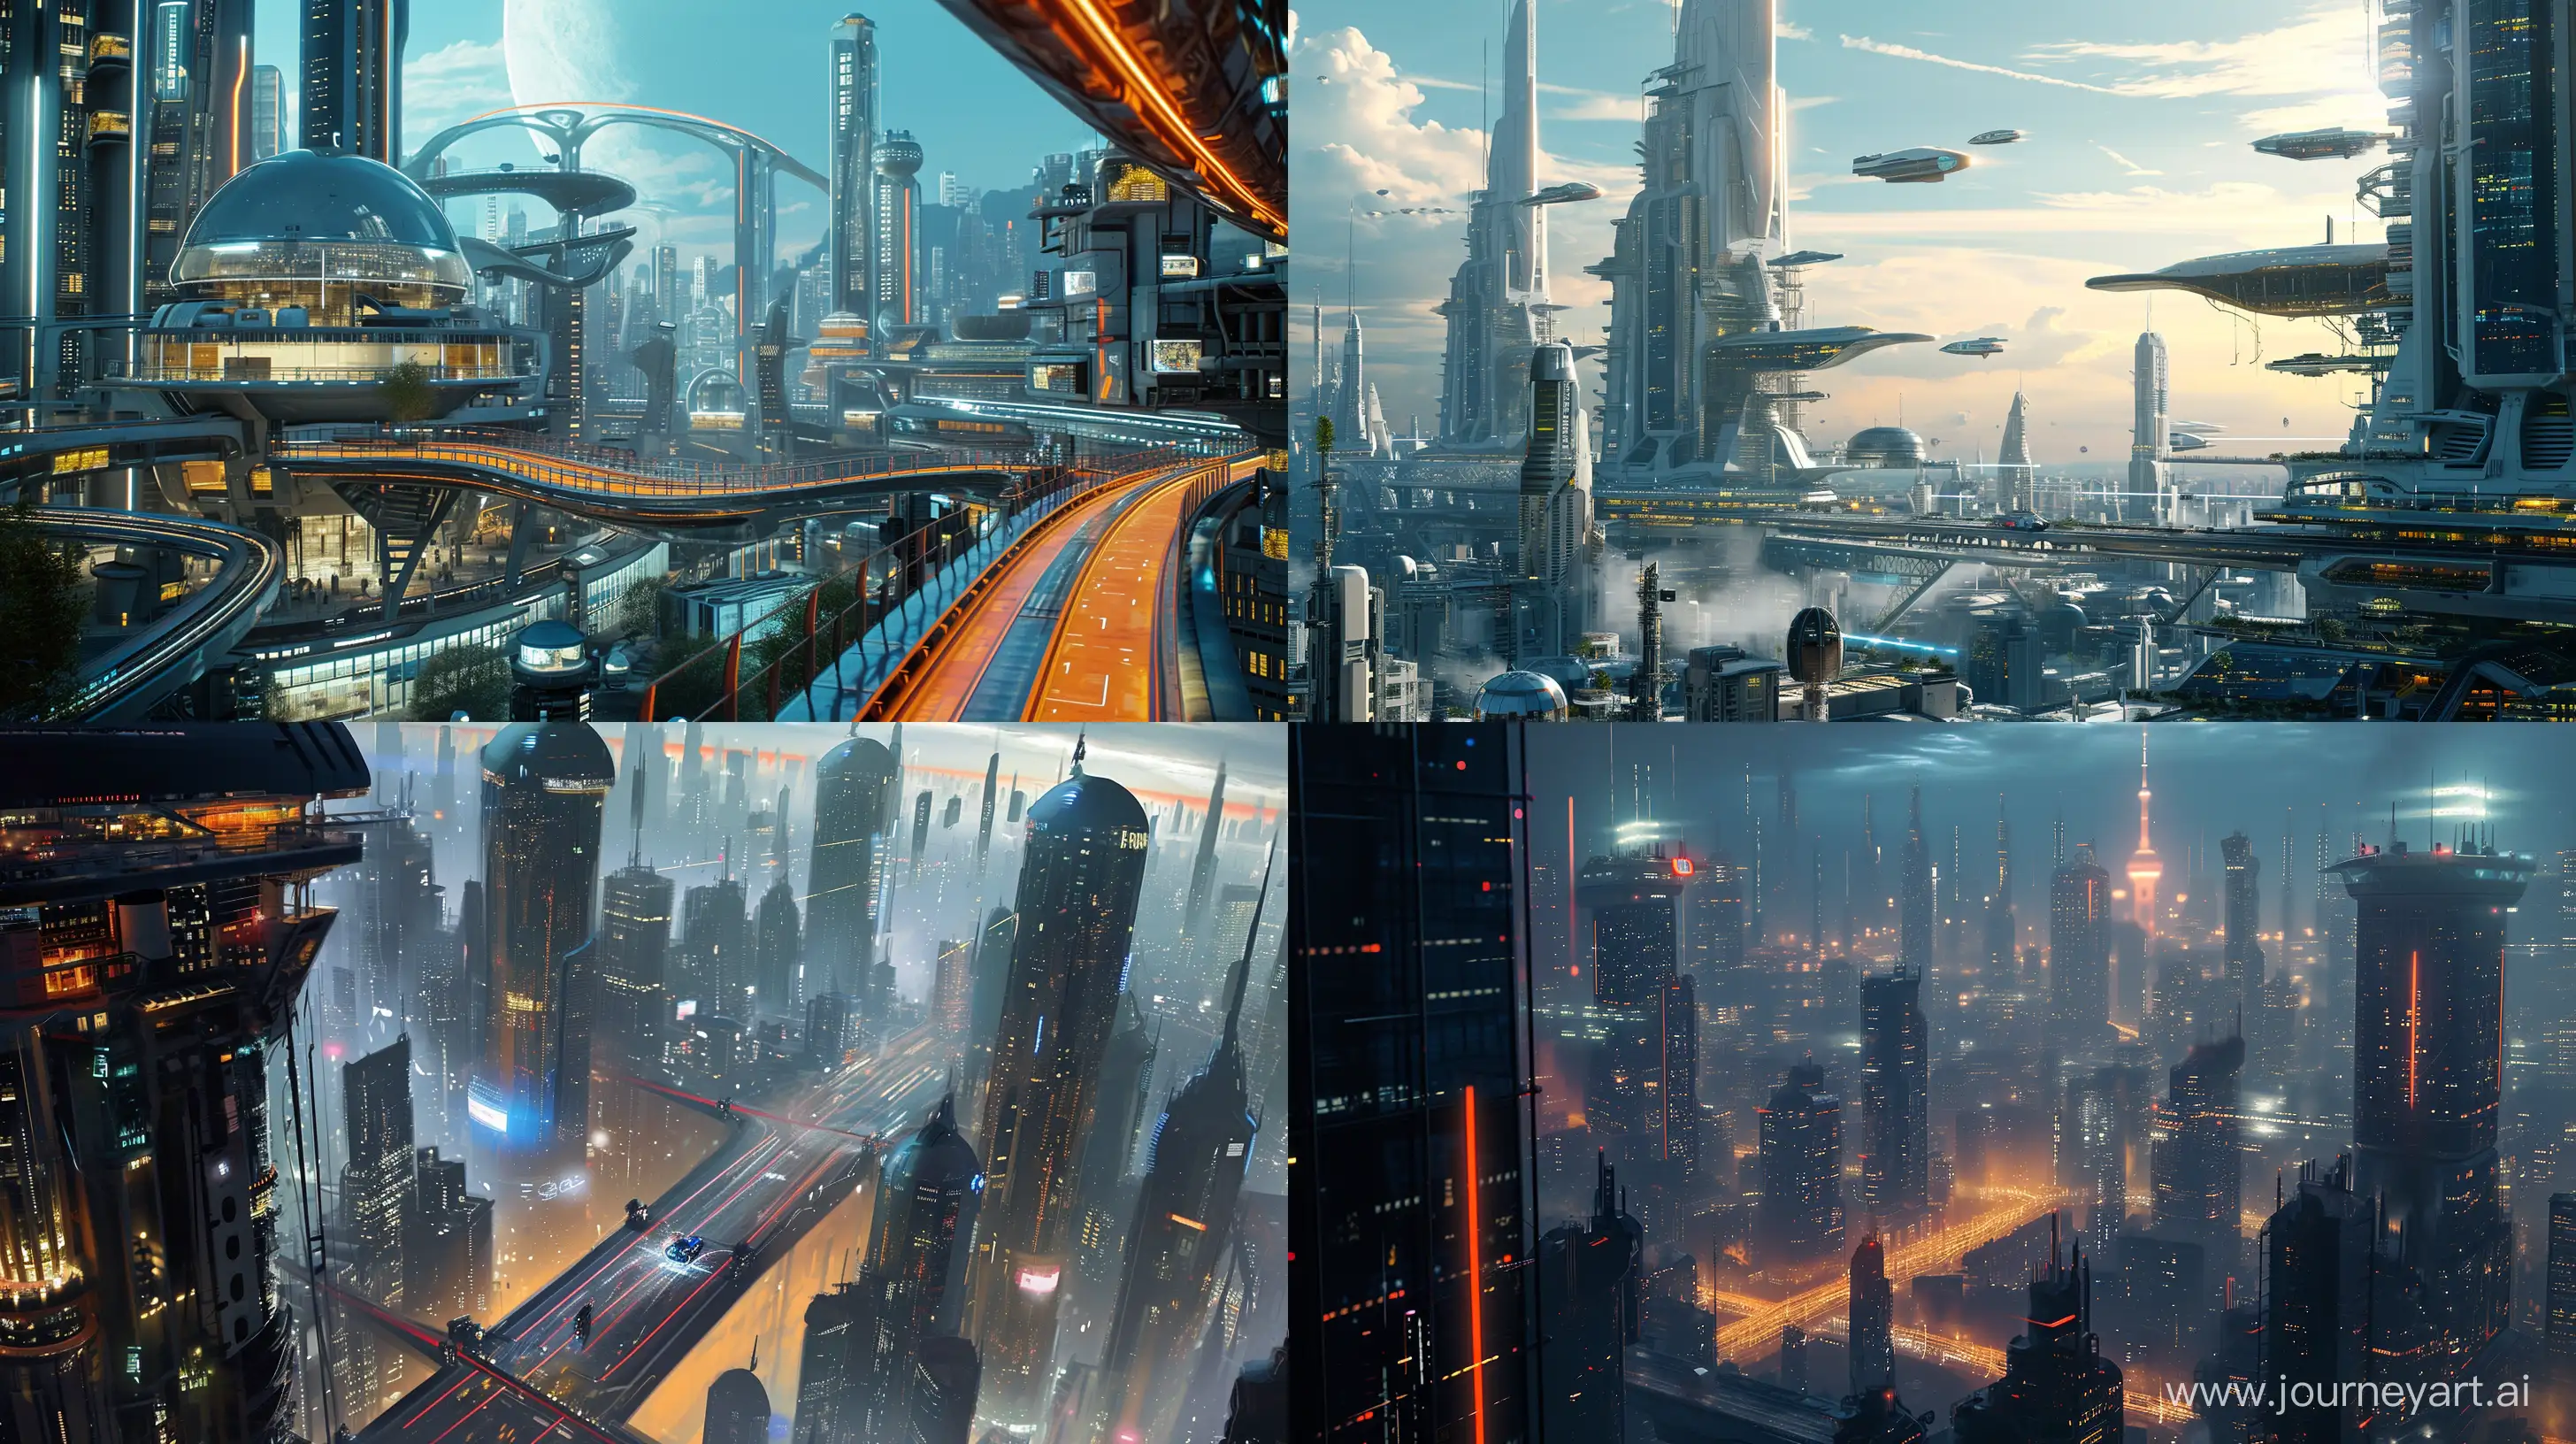 Futuristic-Cityscape-with-AR-Technology